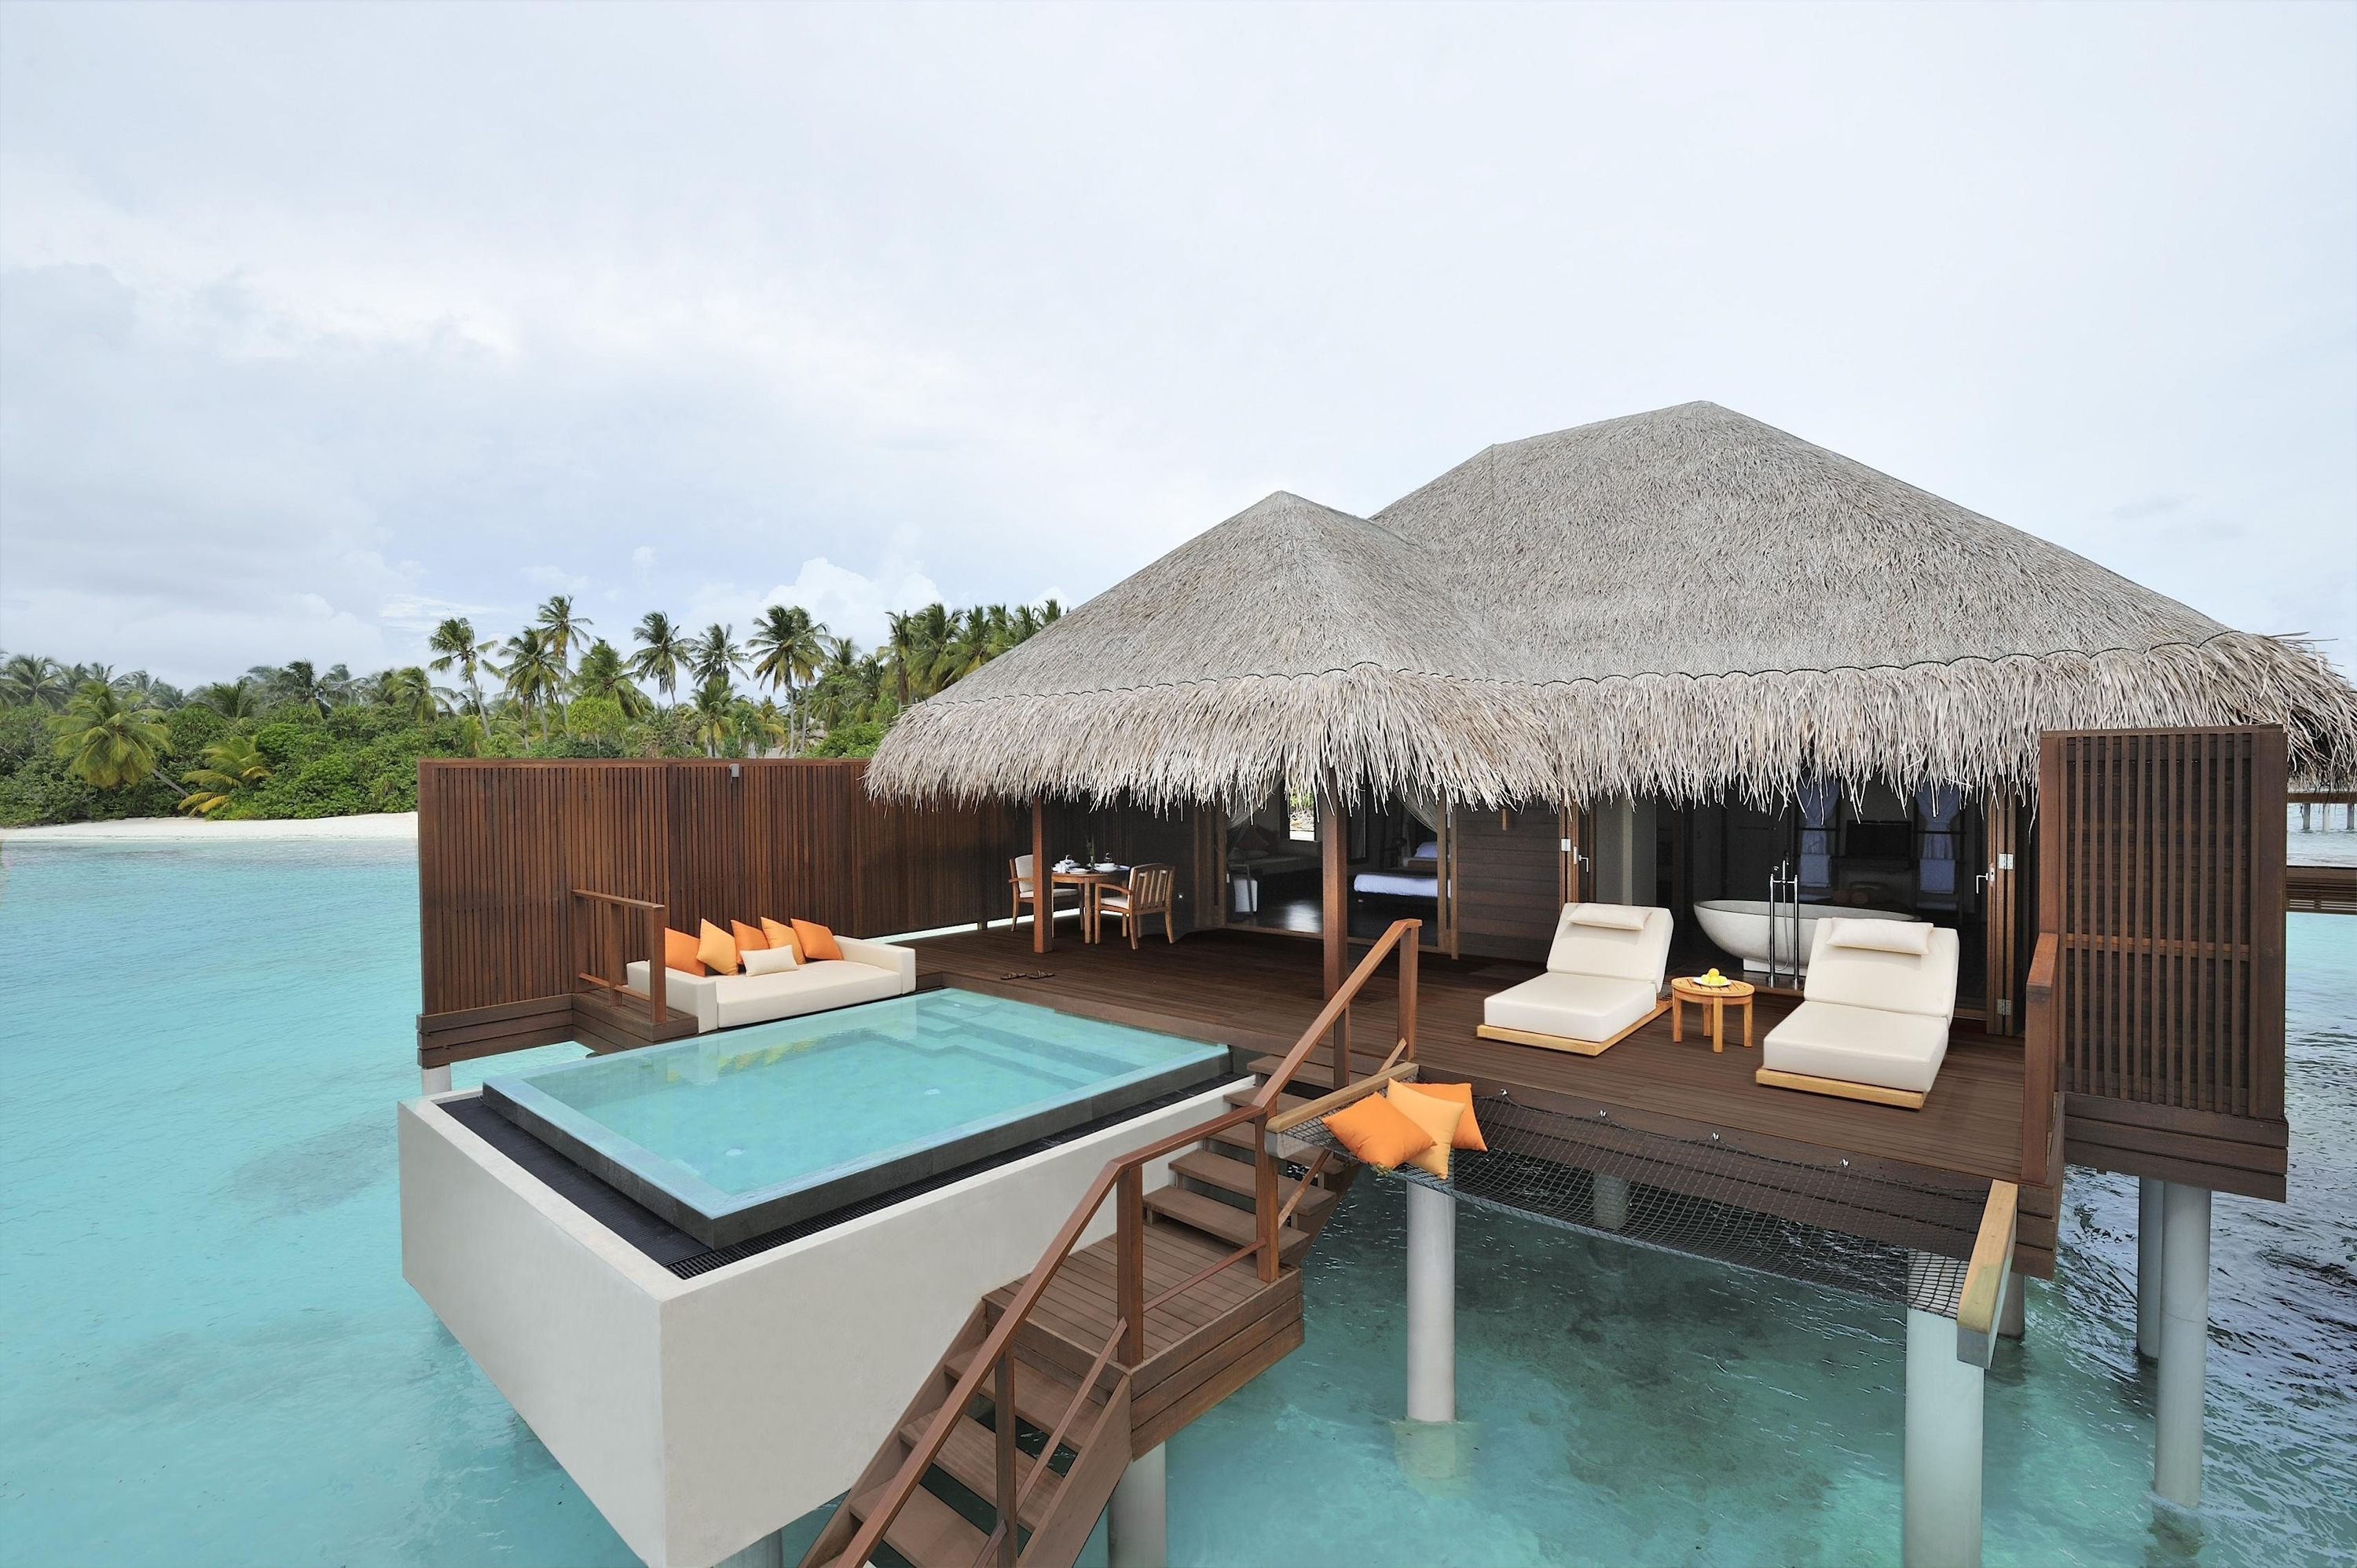 maldives, pool, palms, interior, miscellanea, miscellaneous, ocean, house, island, pillows, cushions, sofas, jacuzzi